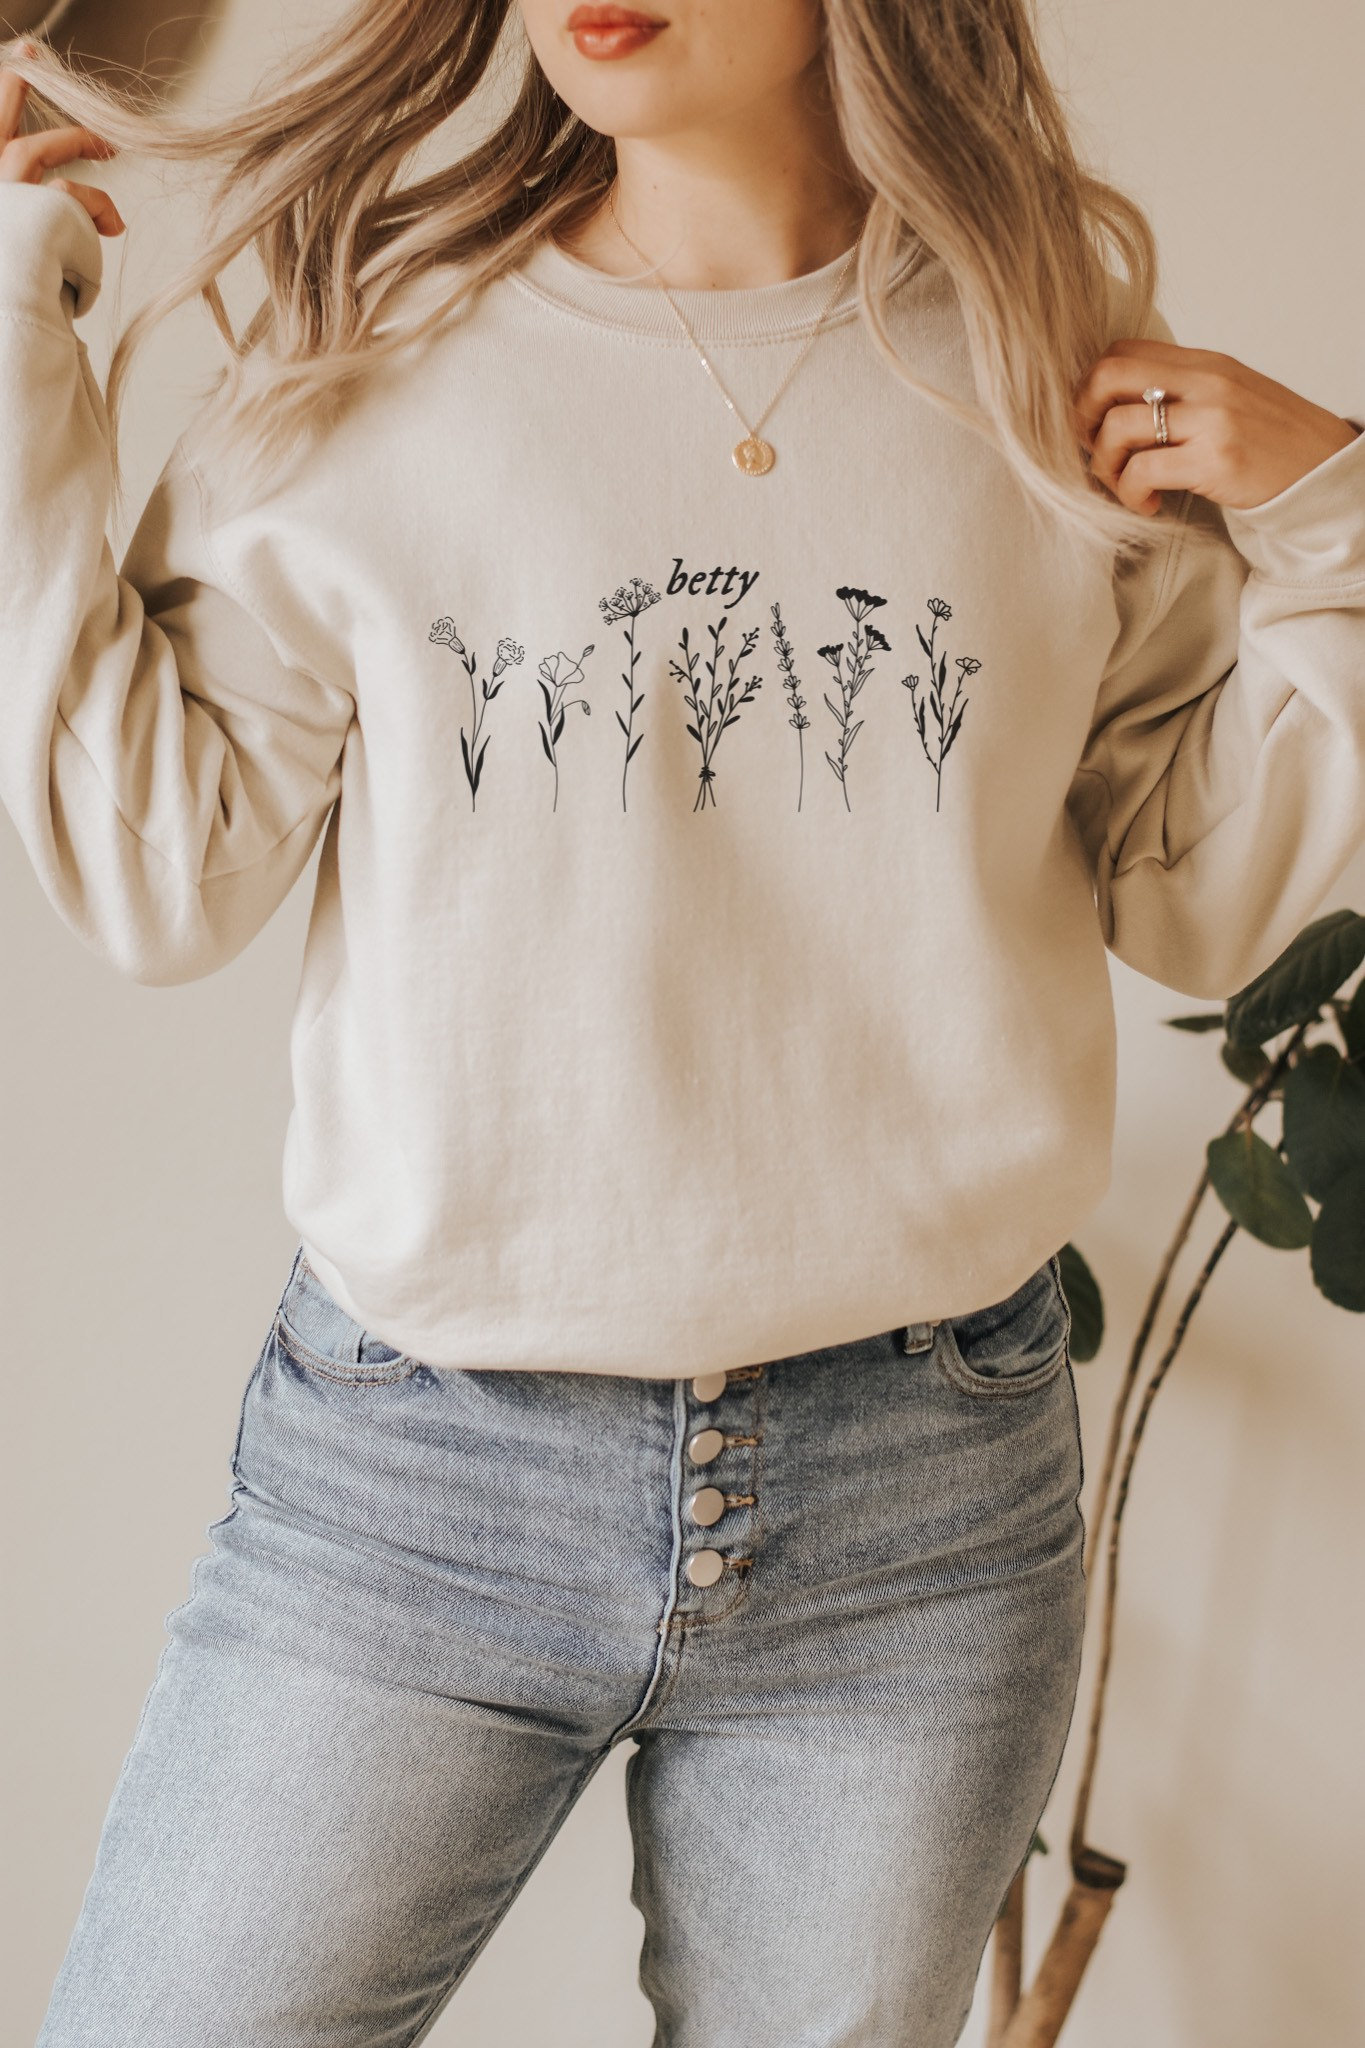 Taylor Swift Folklore sweatshirt Betty sweatshirt Bettys | Etsy